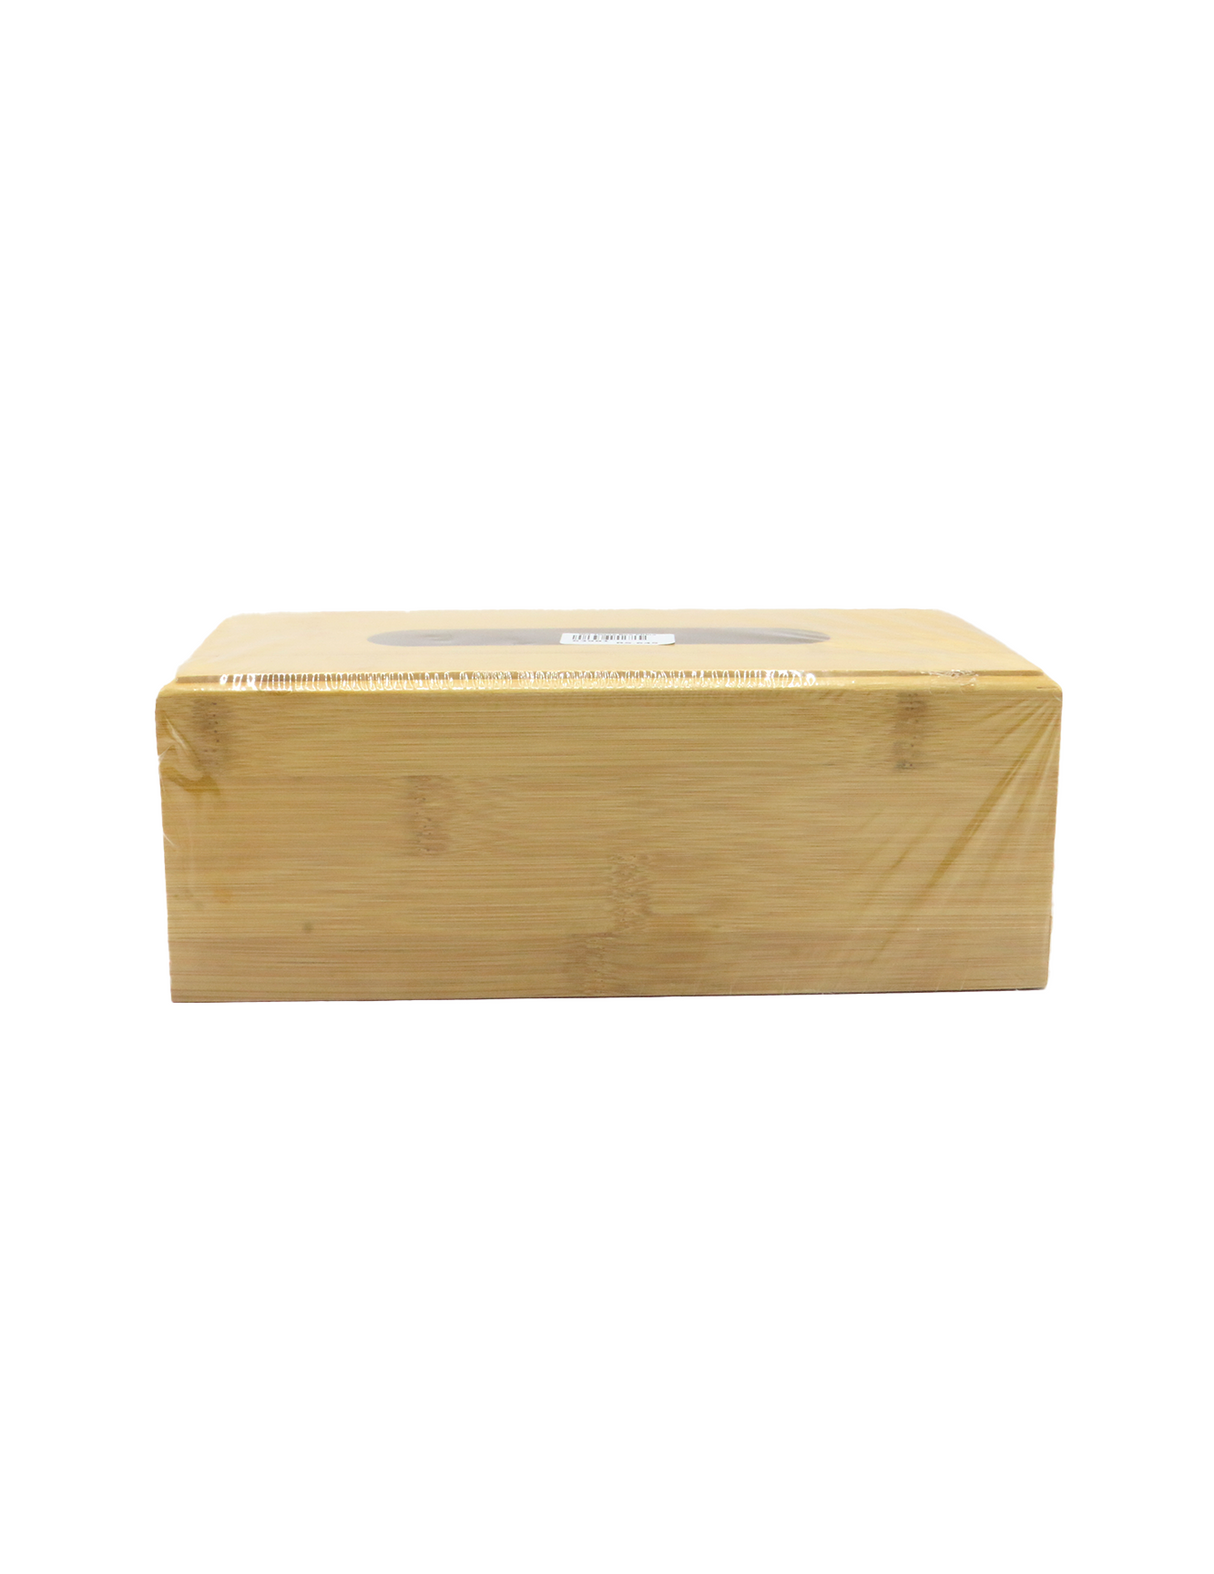 wood tissue box 072 china